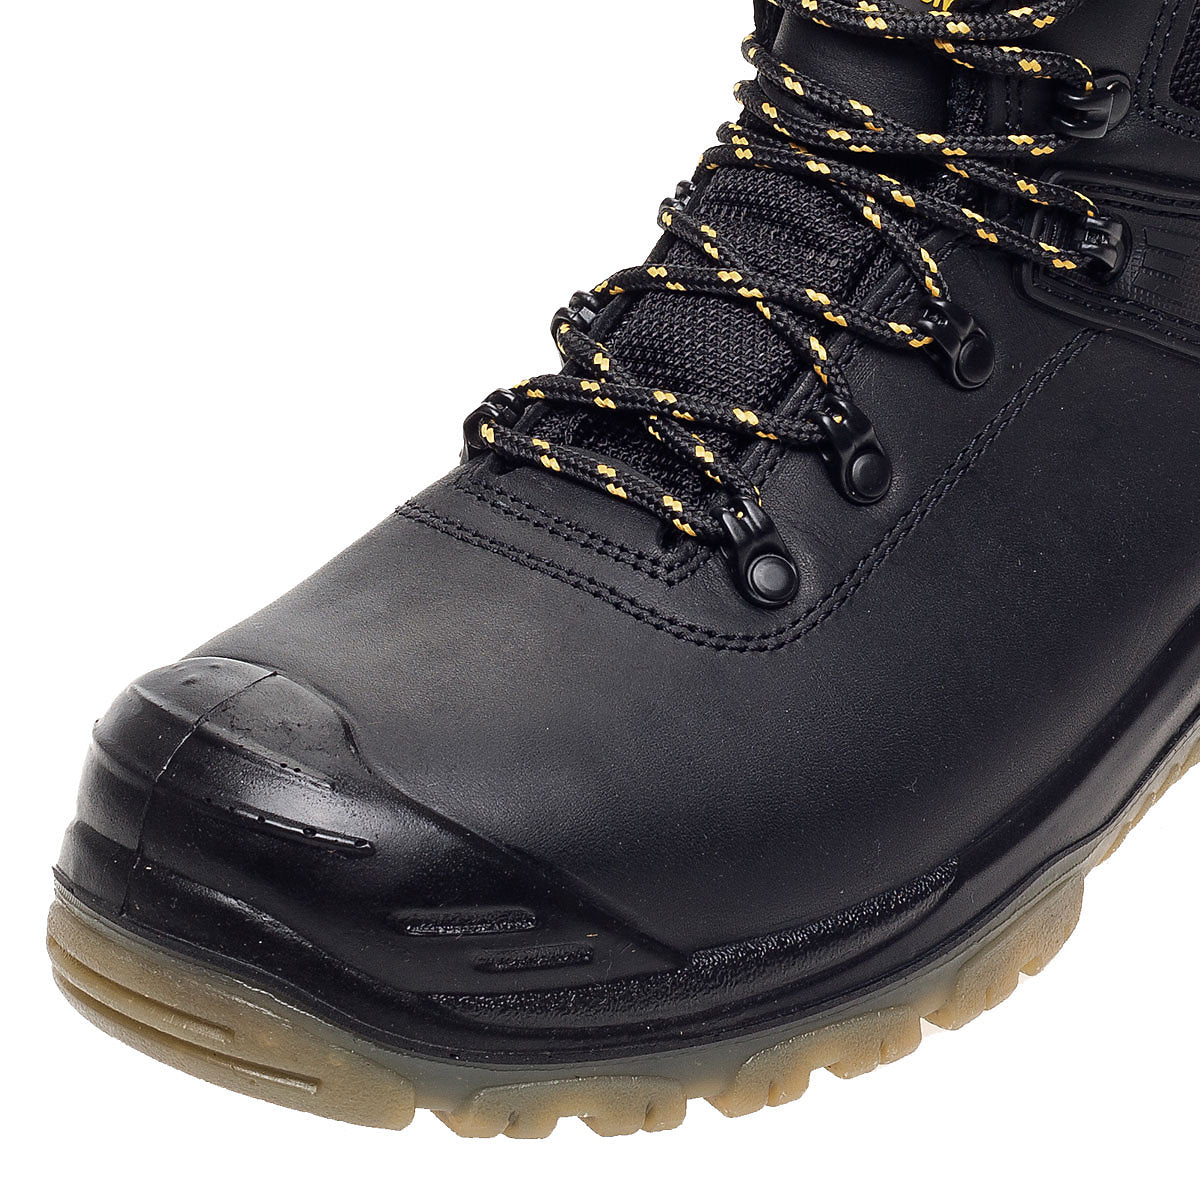 DeWalt Newark Men's Black Safety boots, Size 10 0026